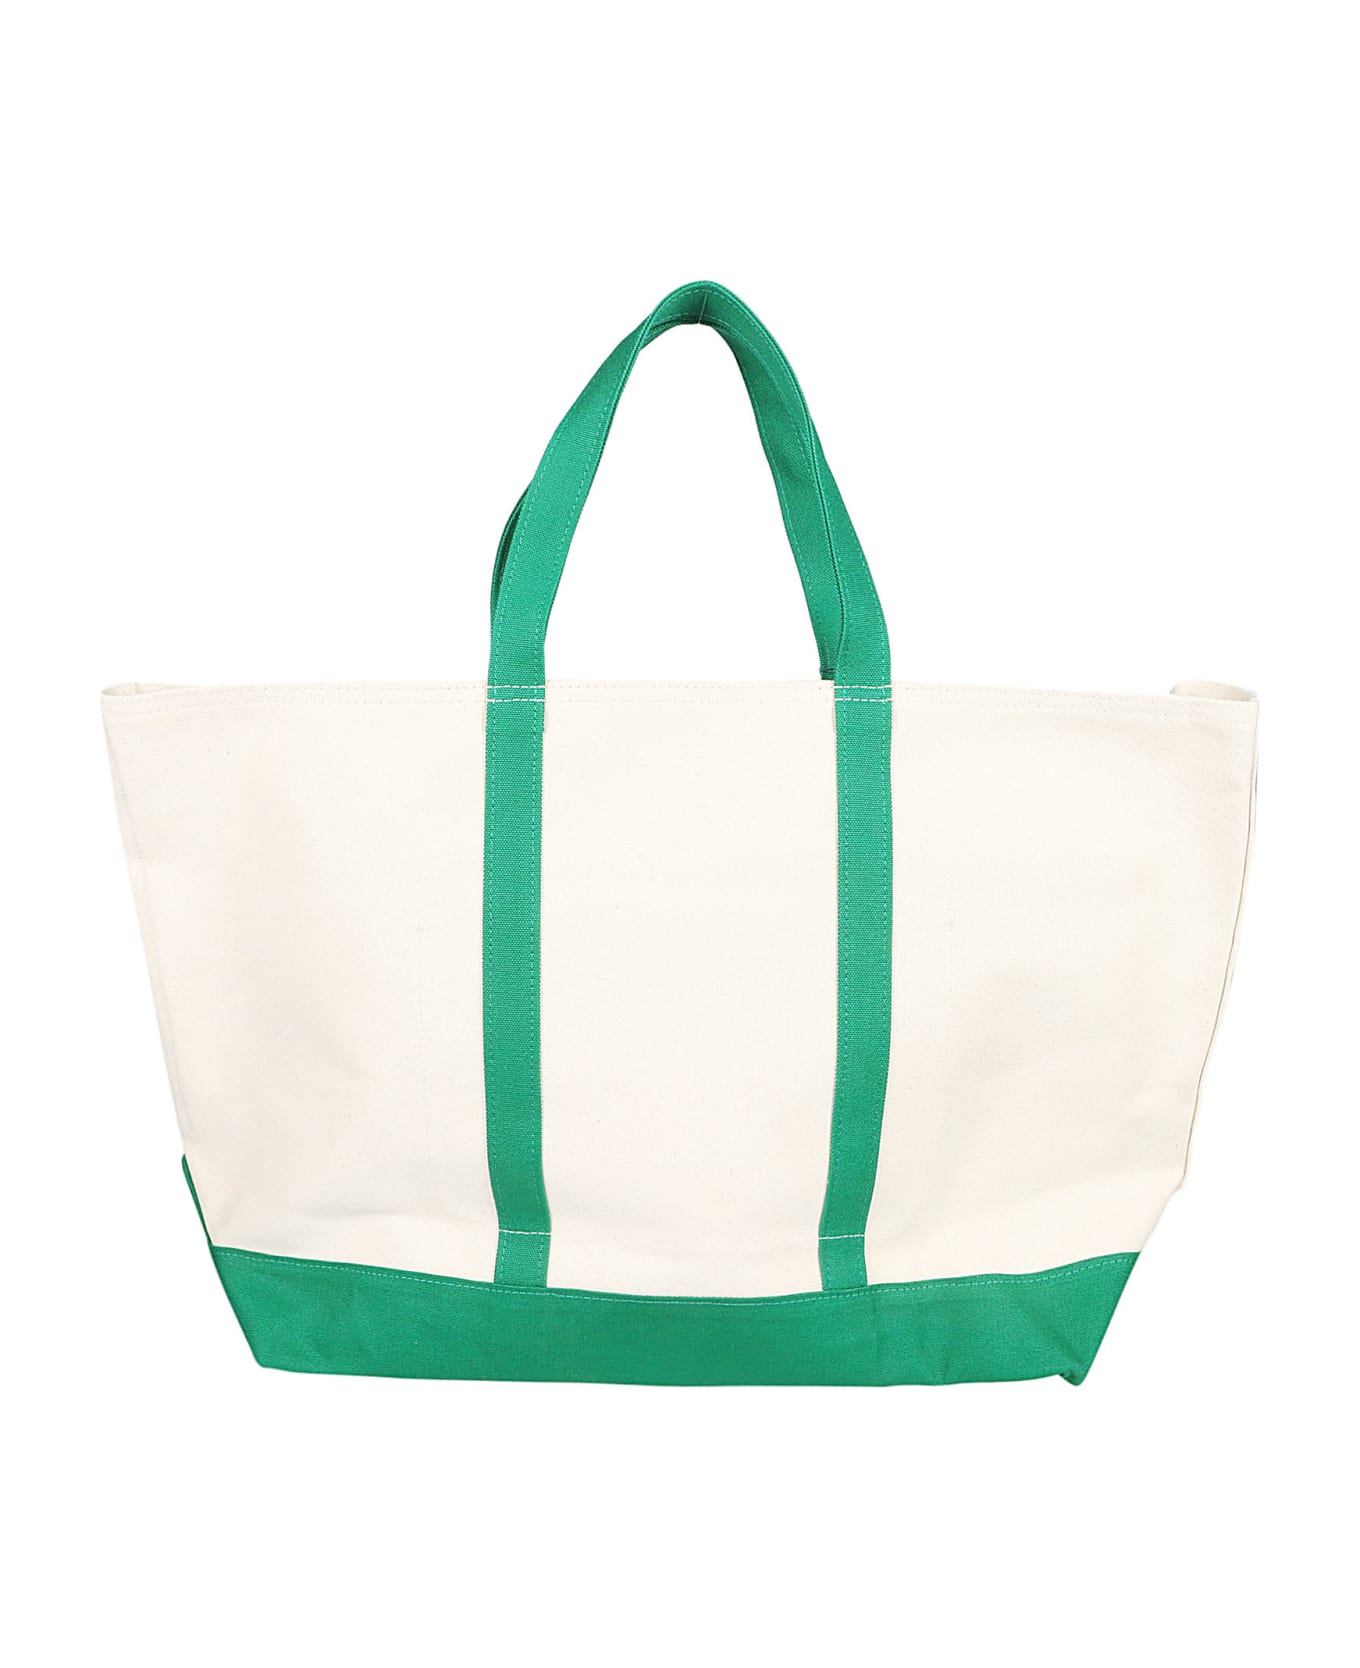 Polo Ralph Lauren Icon Large Tote Bag - Hillside Green/cream